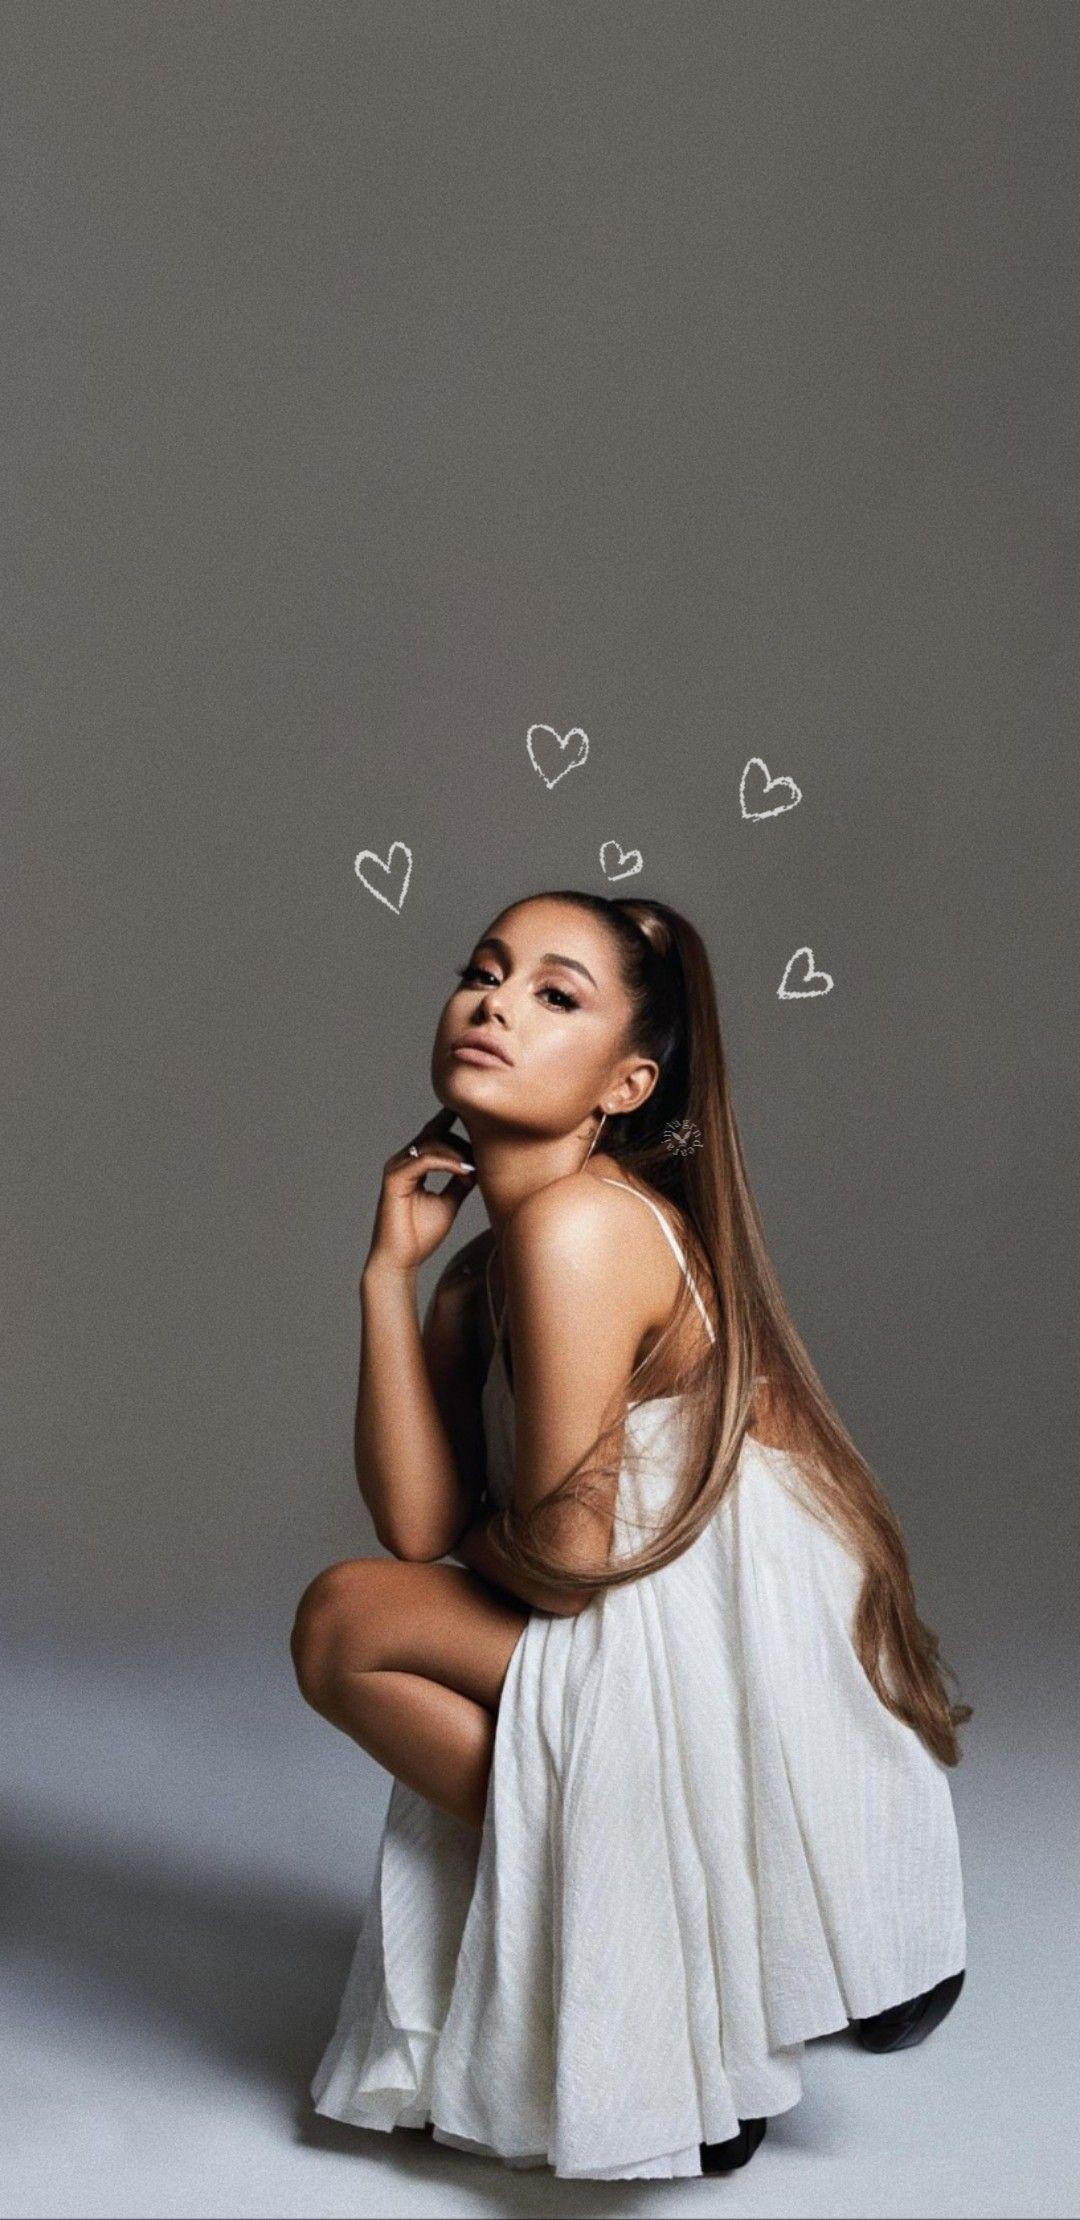 Ariana Grande 2019 Wallpapers - Top